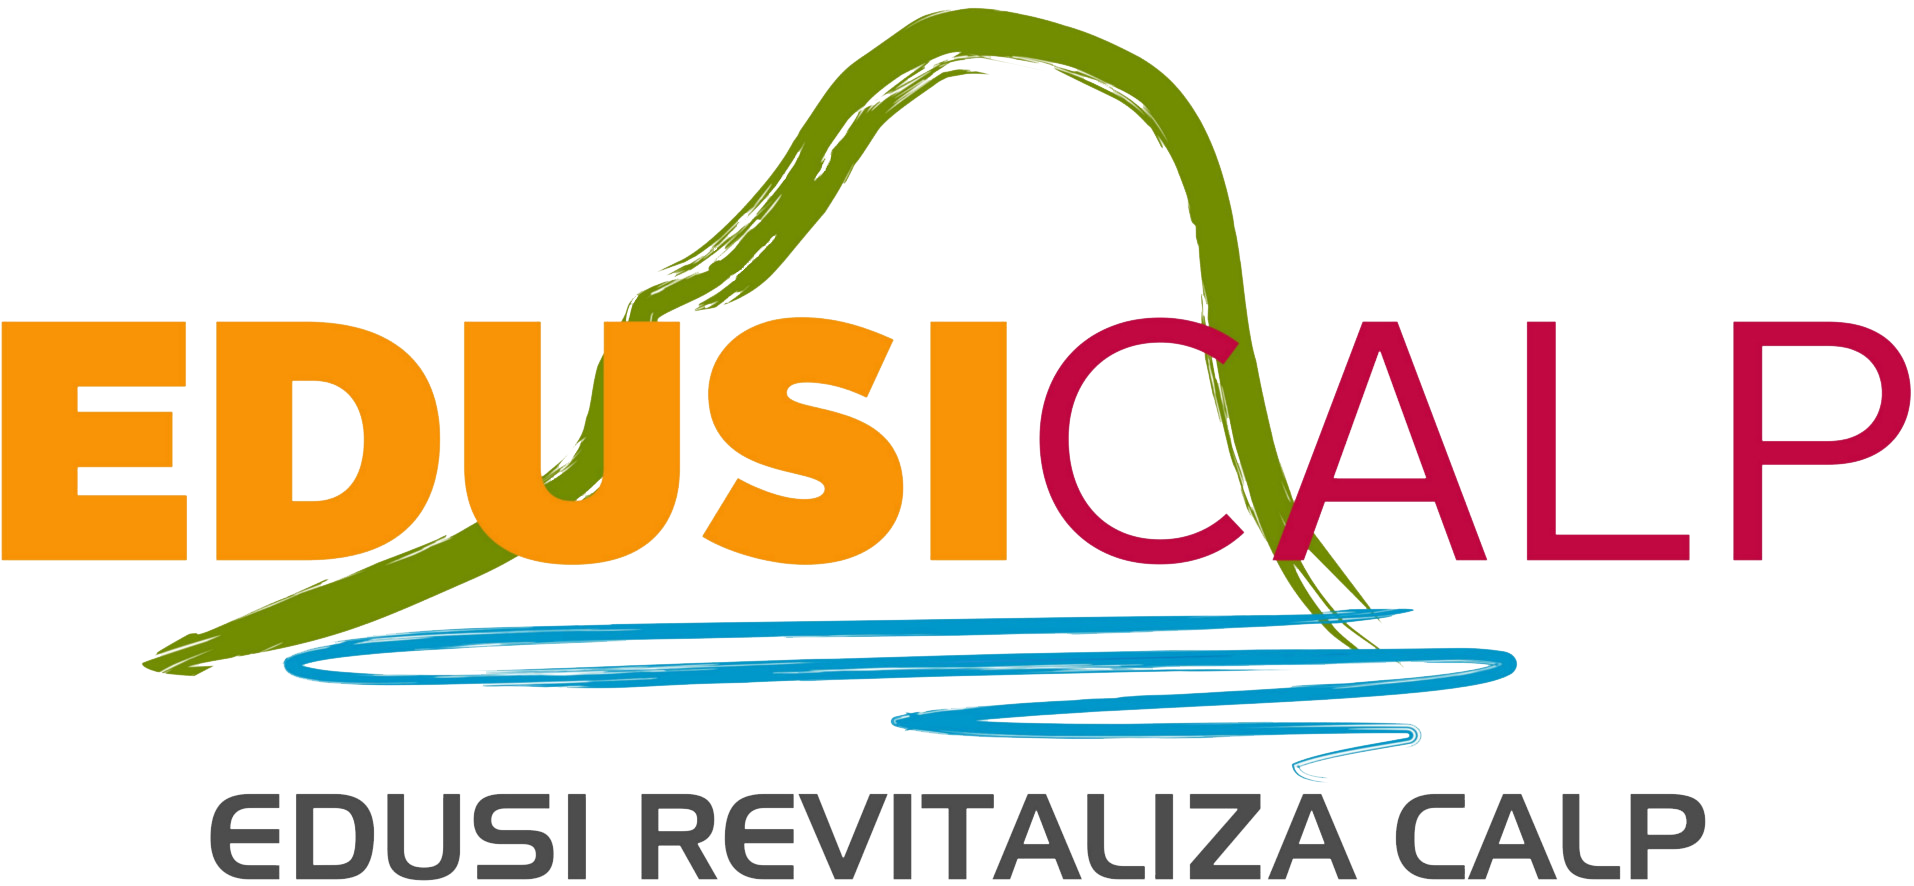 EDUSI Logo